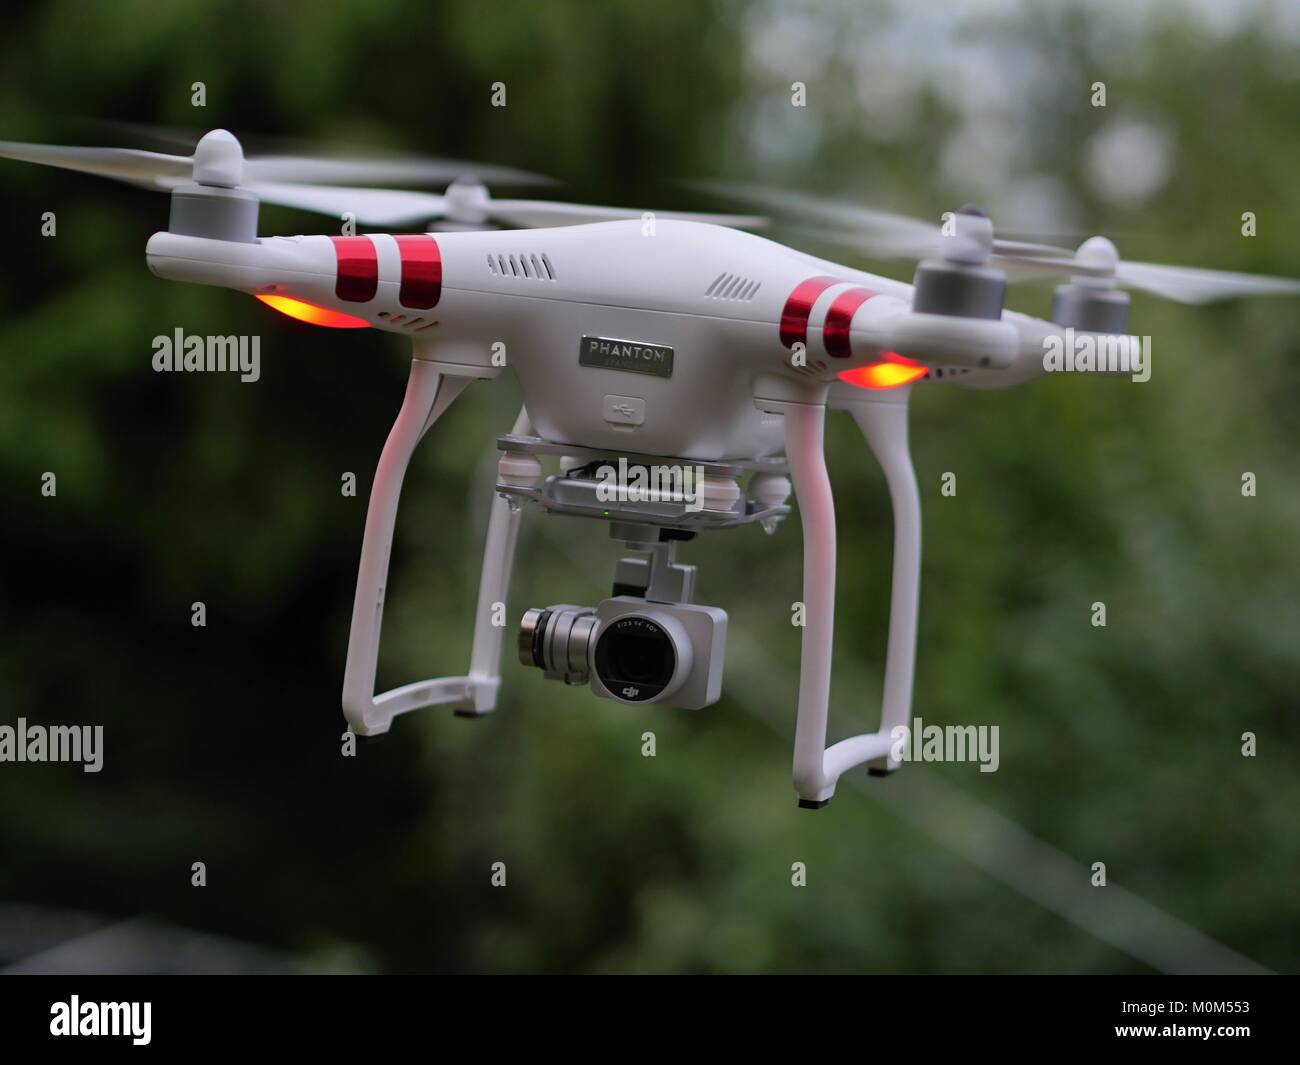 DJI Phantom 3 Standard drone Fotografía de stock - Alamy